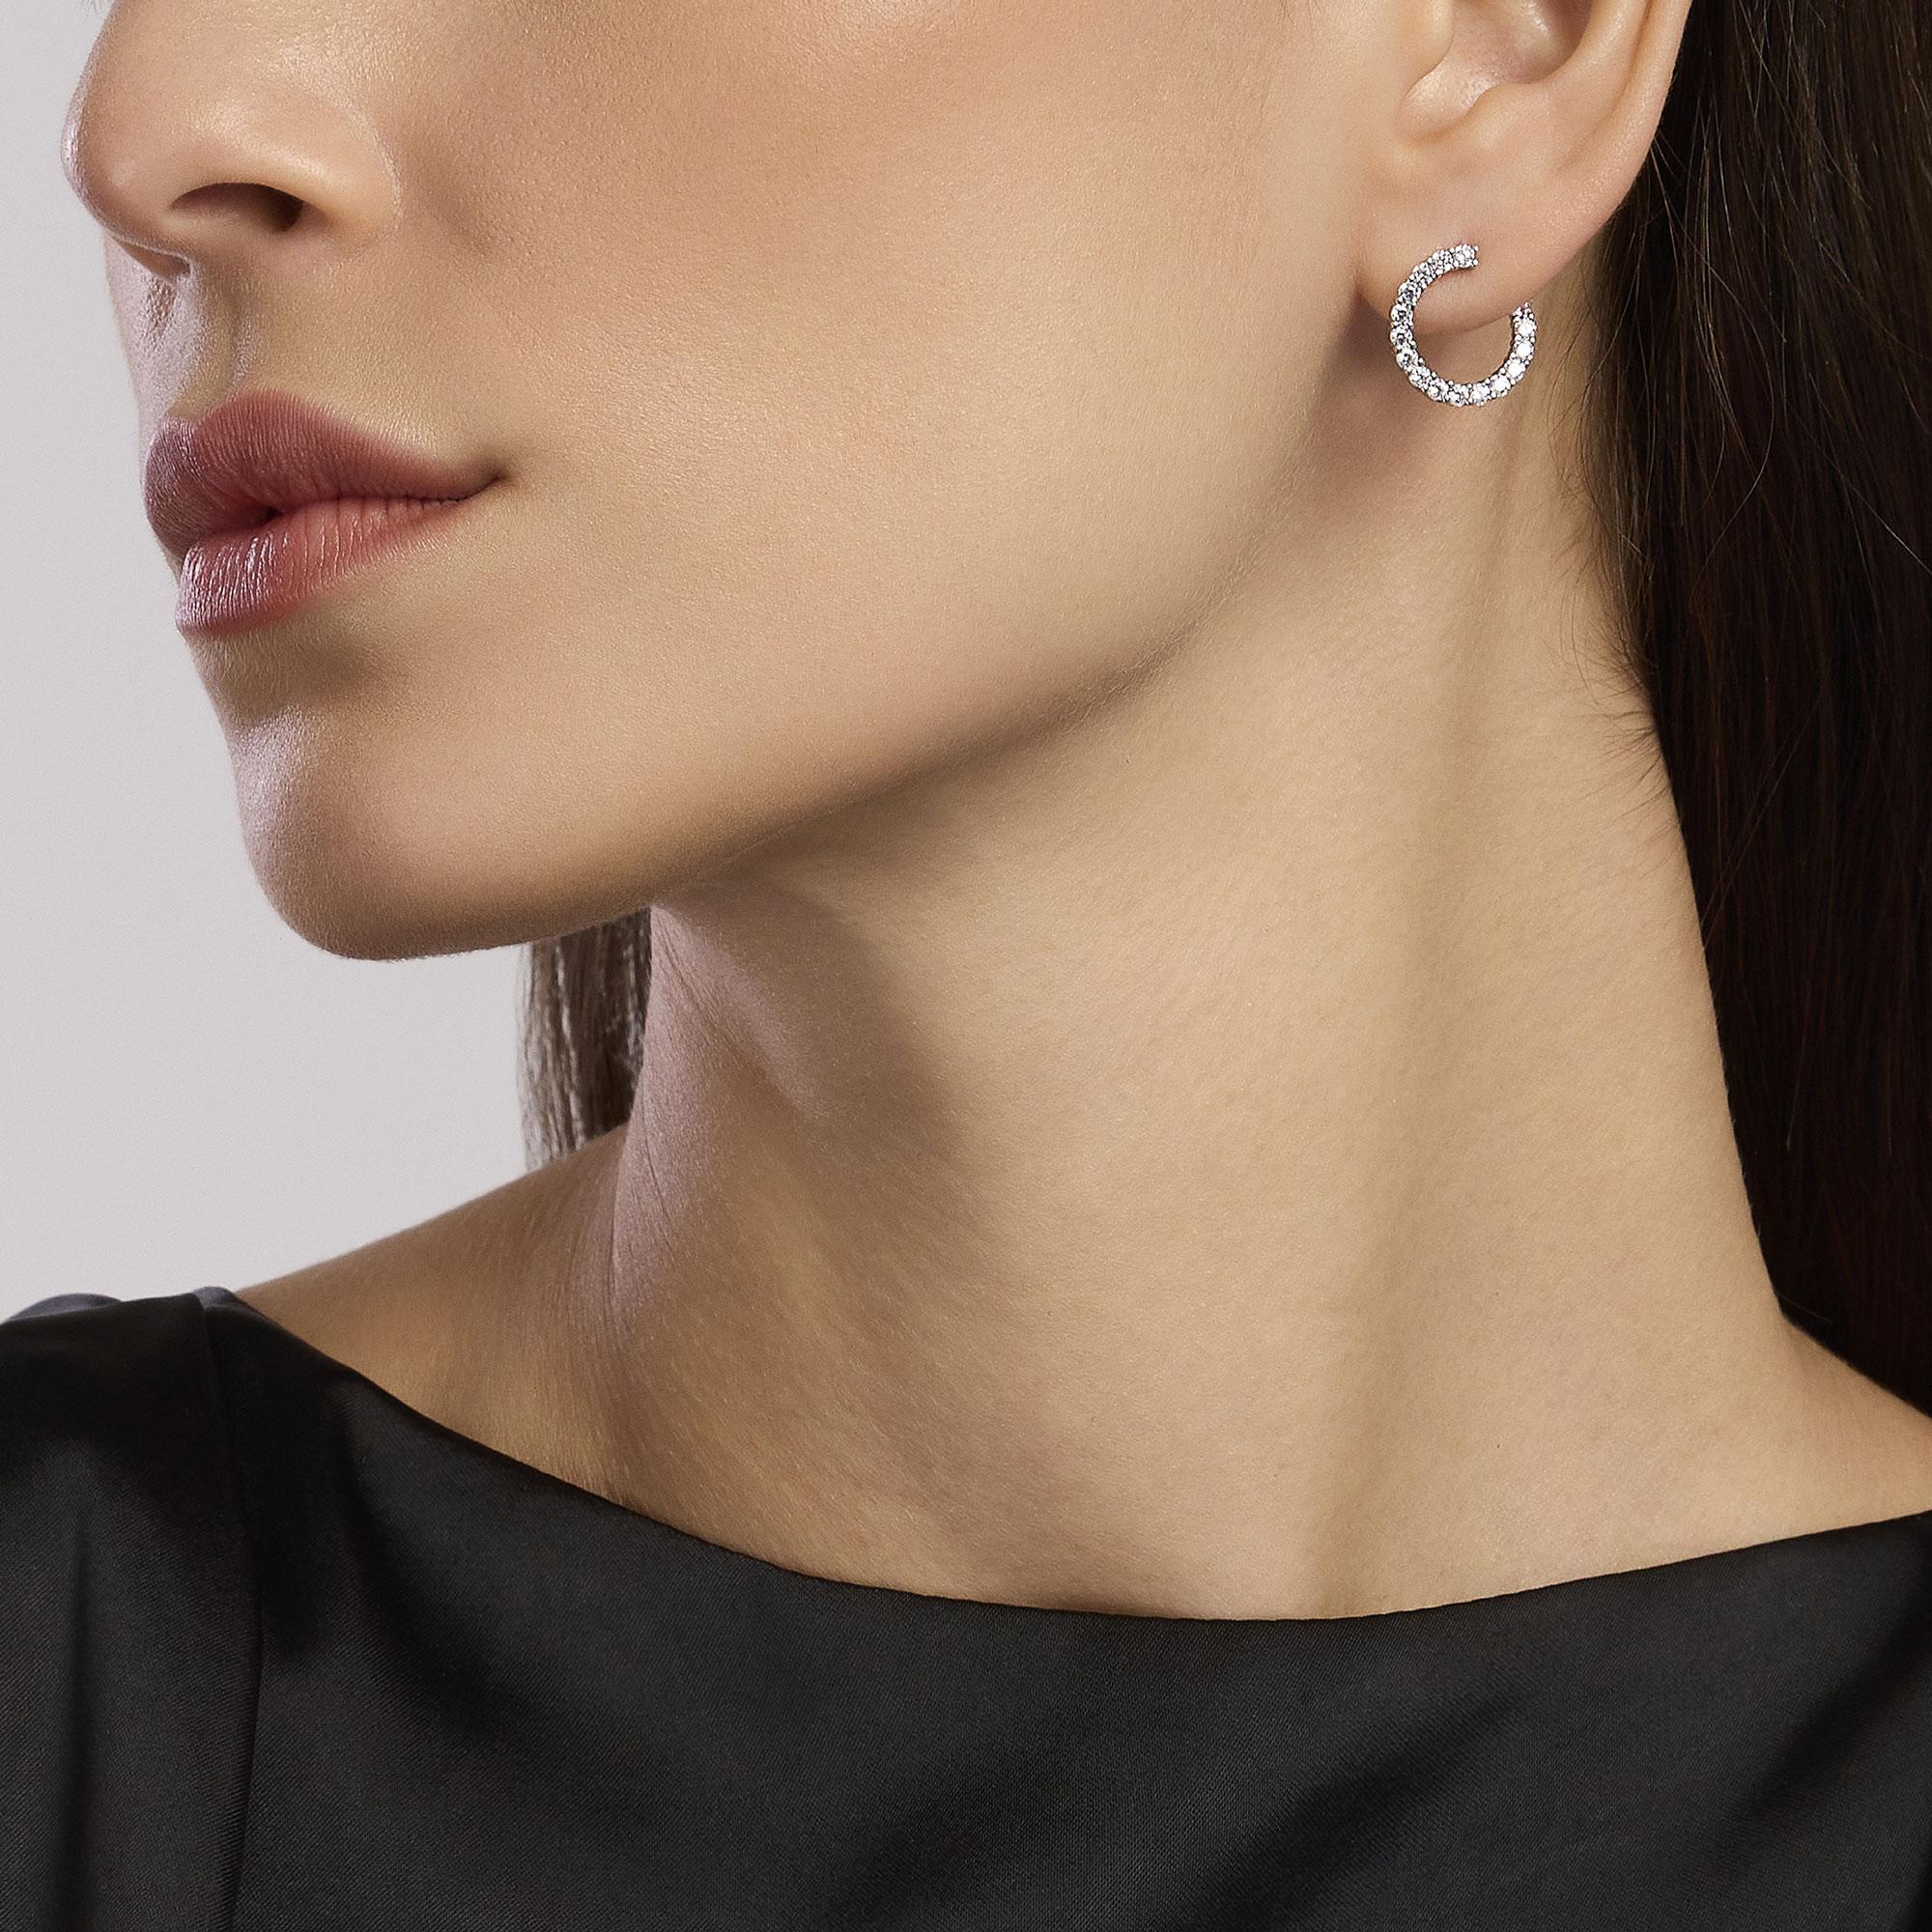 Mabina Woman - FUTURIST silver earrings with zircons - 563755